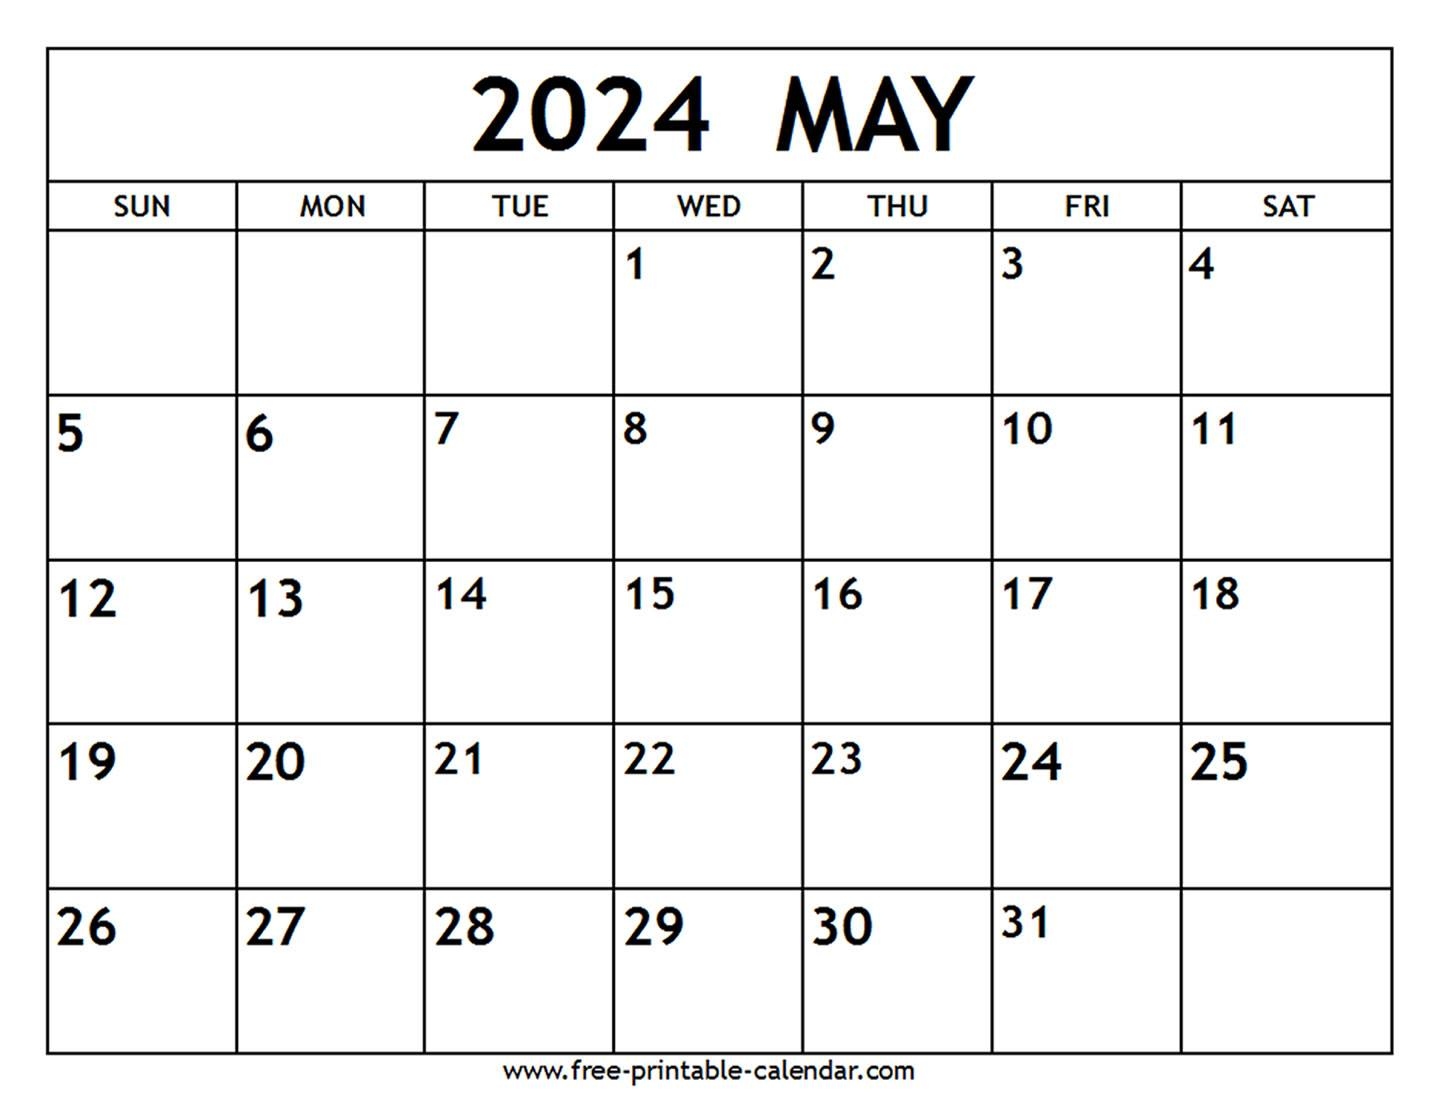 May 2024 Calendar - Free-Printable-Calendar inside Free Printable Calendar 2024 May Through December